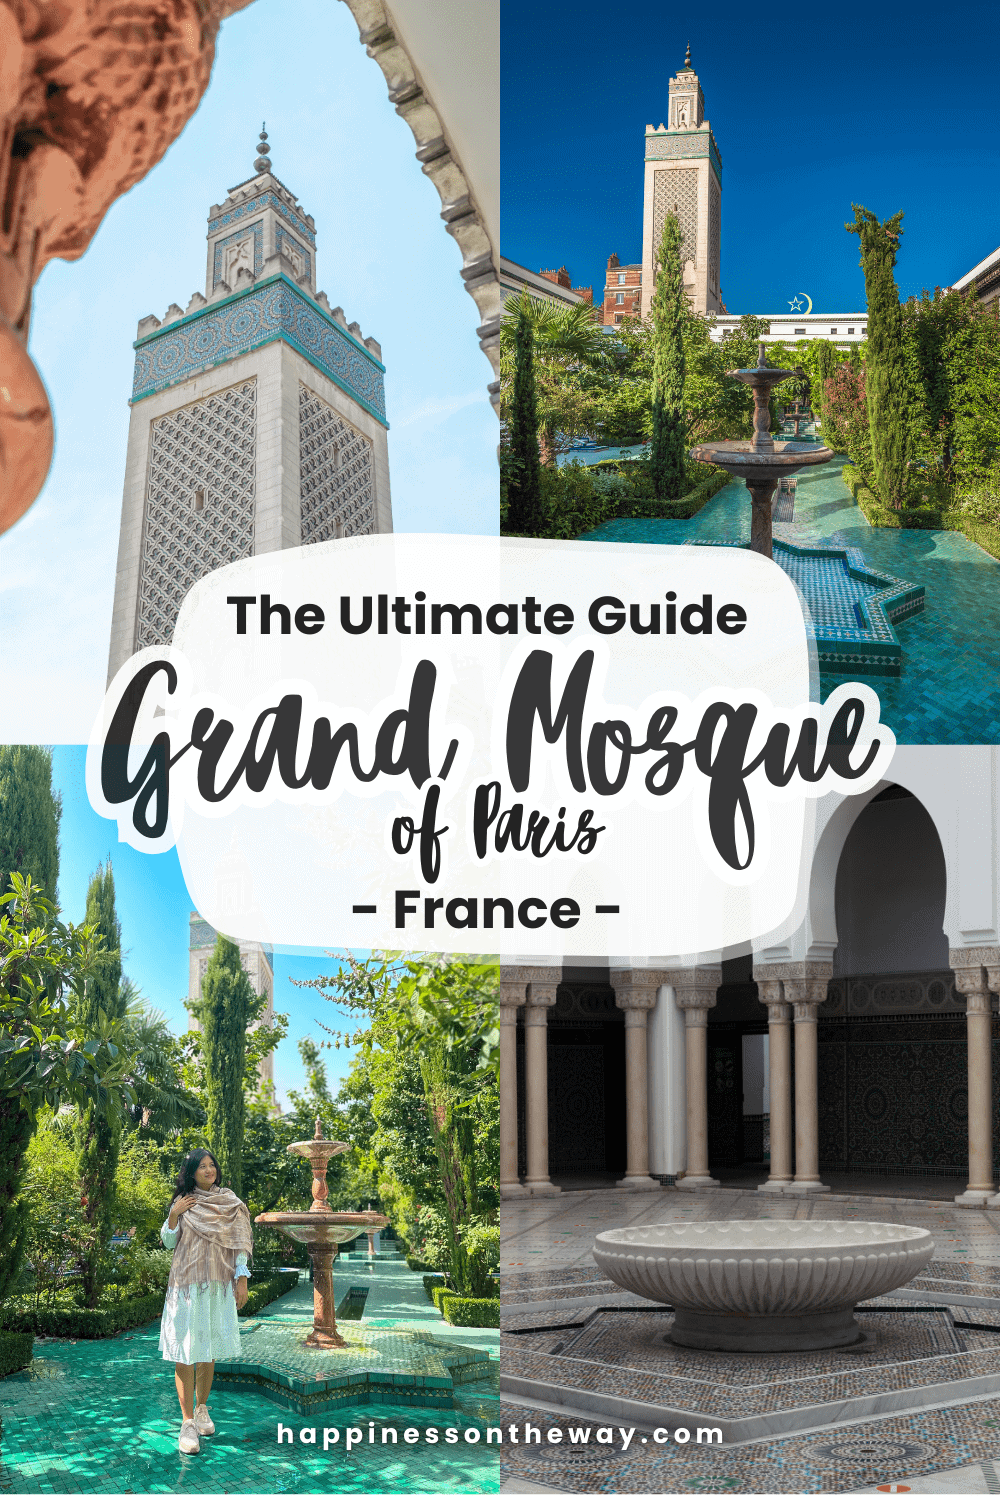 Grand Mosque of Paris (Grande Mosquée de Paris)